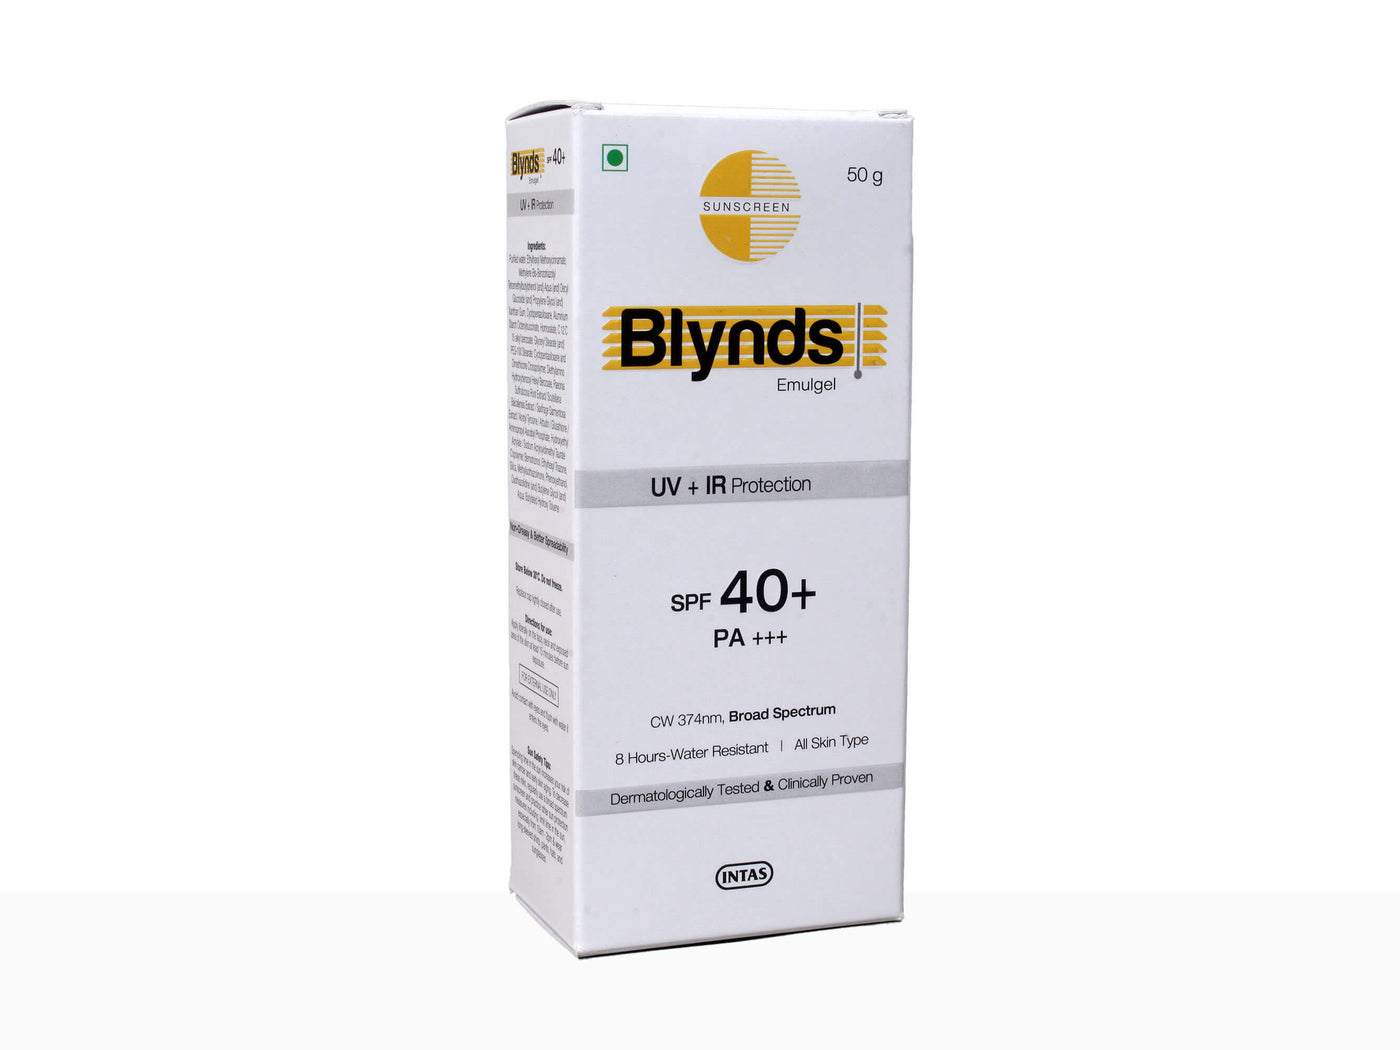 Blynds Emulgel Sunscreen SPF 40+ PA+++